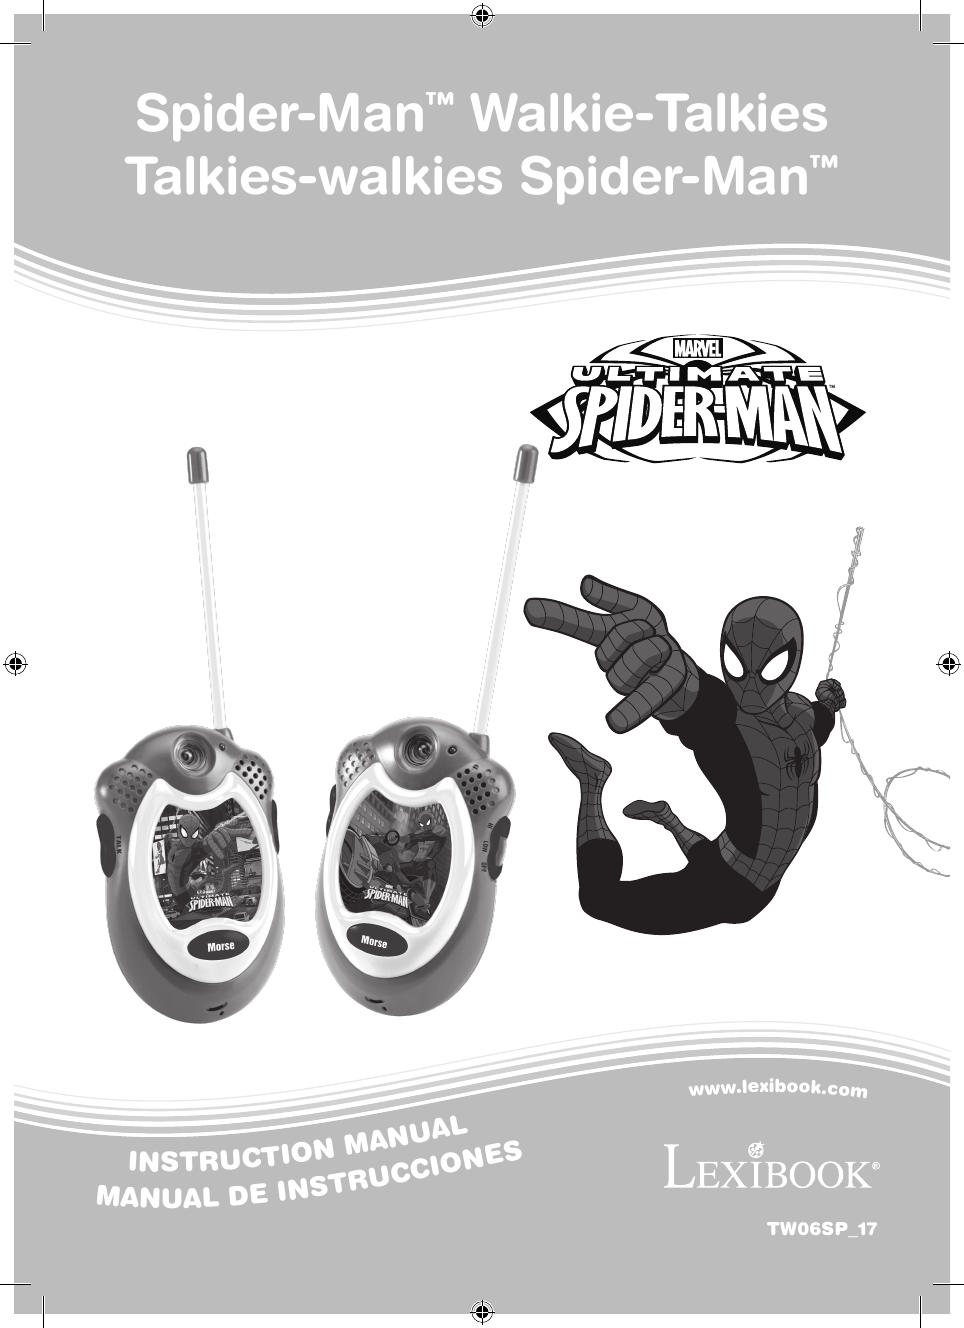 1TW06SP_17                   INSTRUCTION MANUAL                         www.lexibook.com             MANUAL DE INSTRUCCIONESSpider-Man™ Walkie-TalkiesTalkies-walkies Spider-Man™